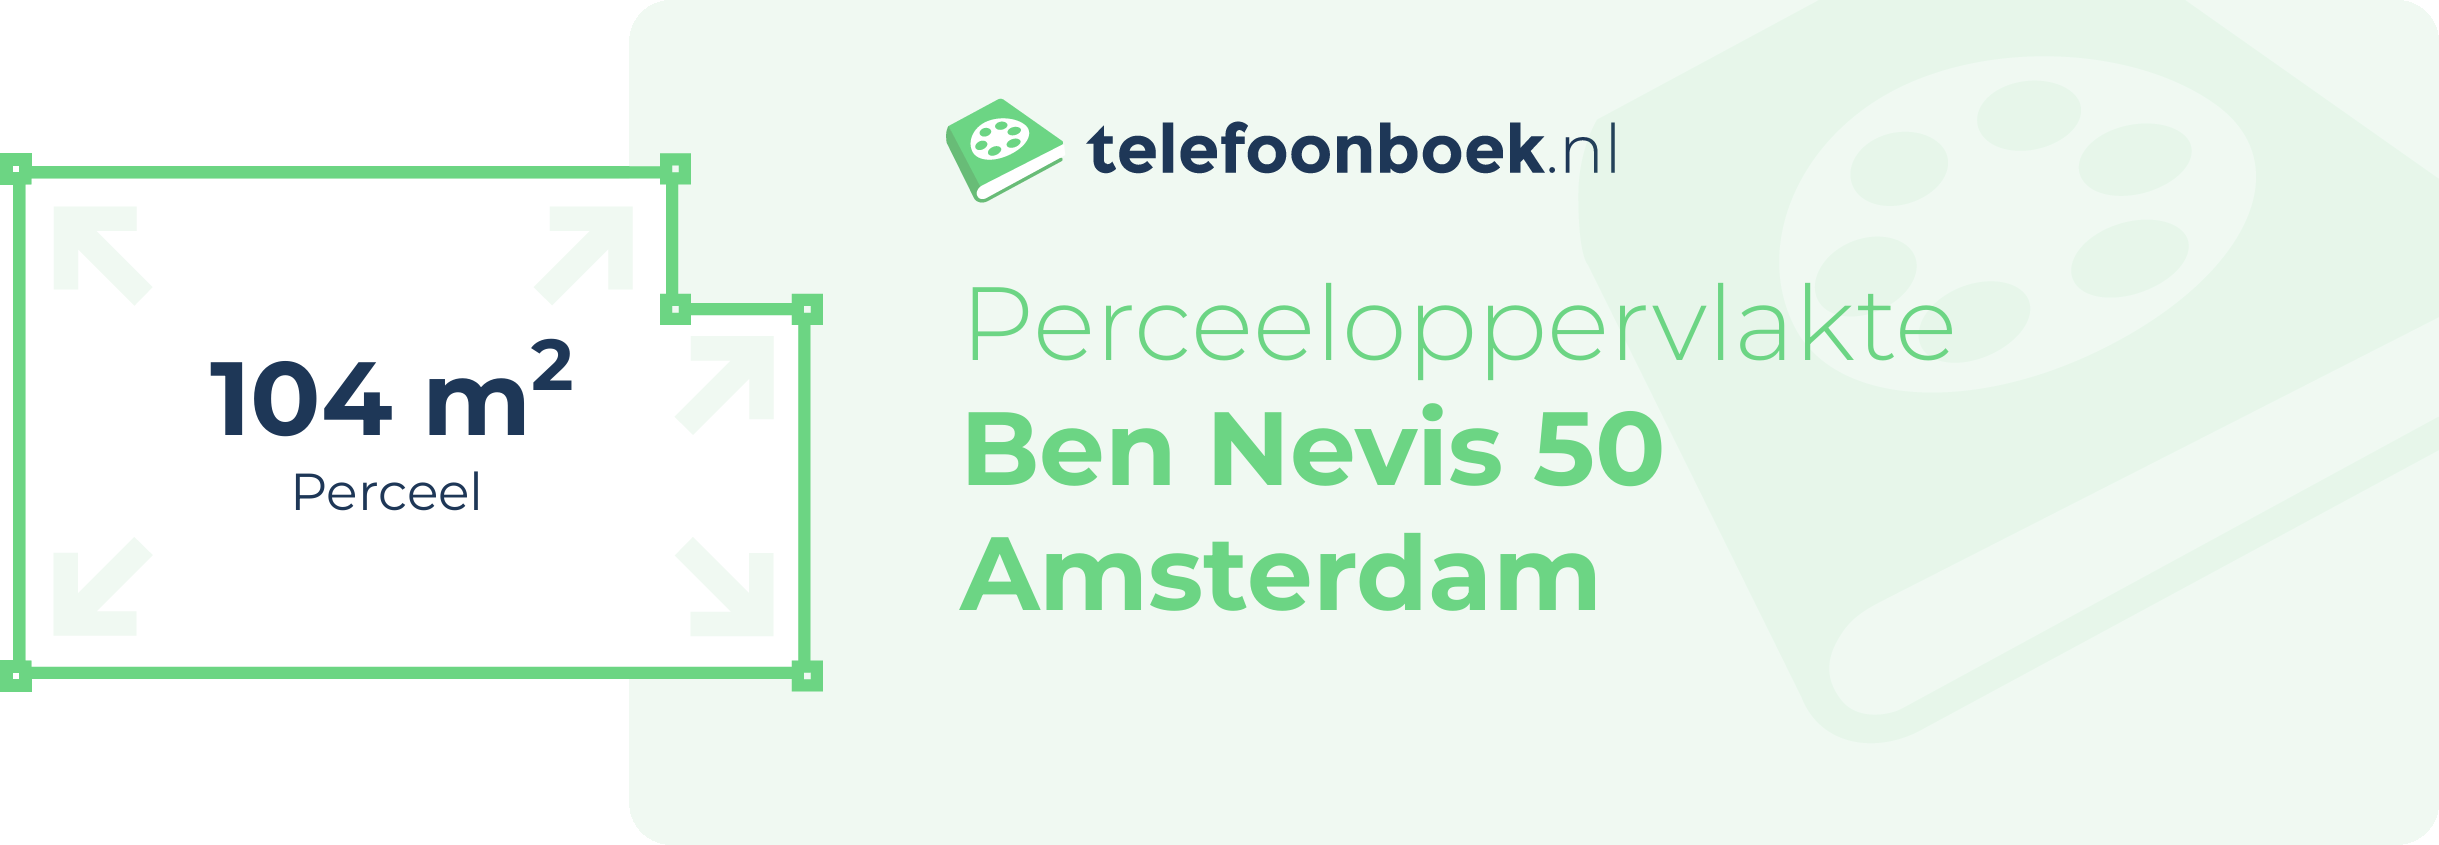 Perceeloppervlakte Ben Nevis 50 Amsterdam